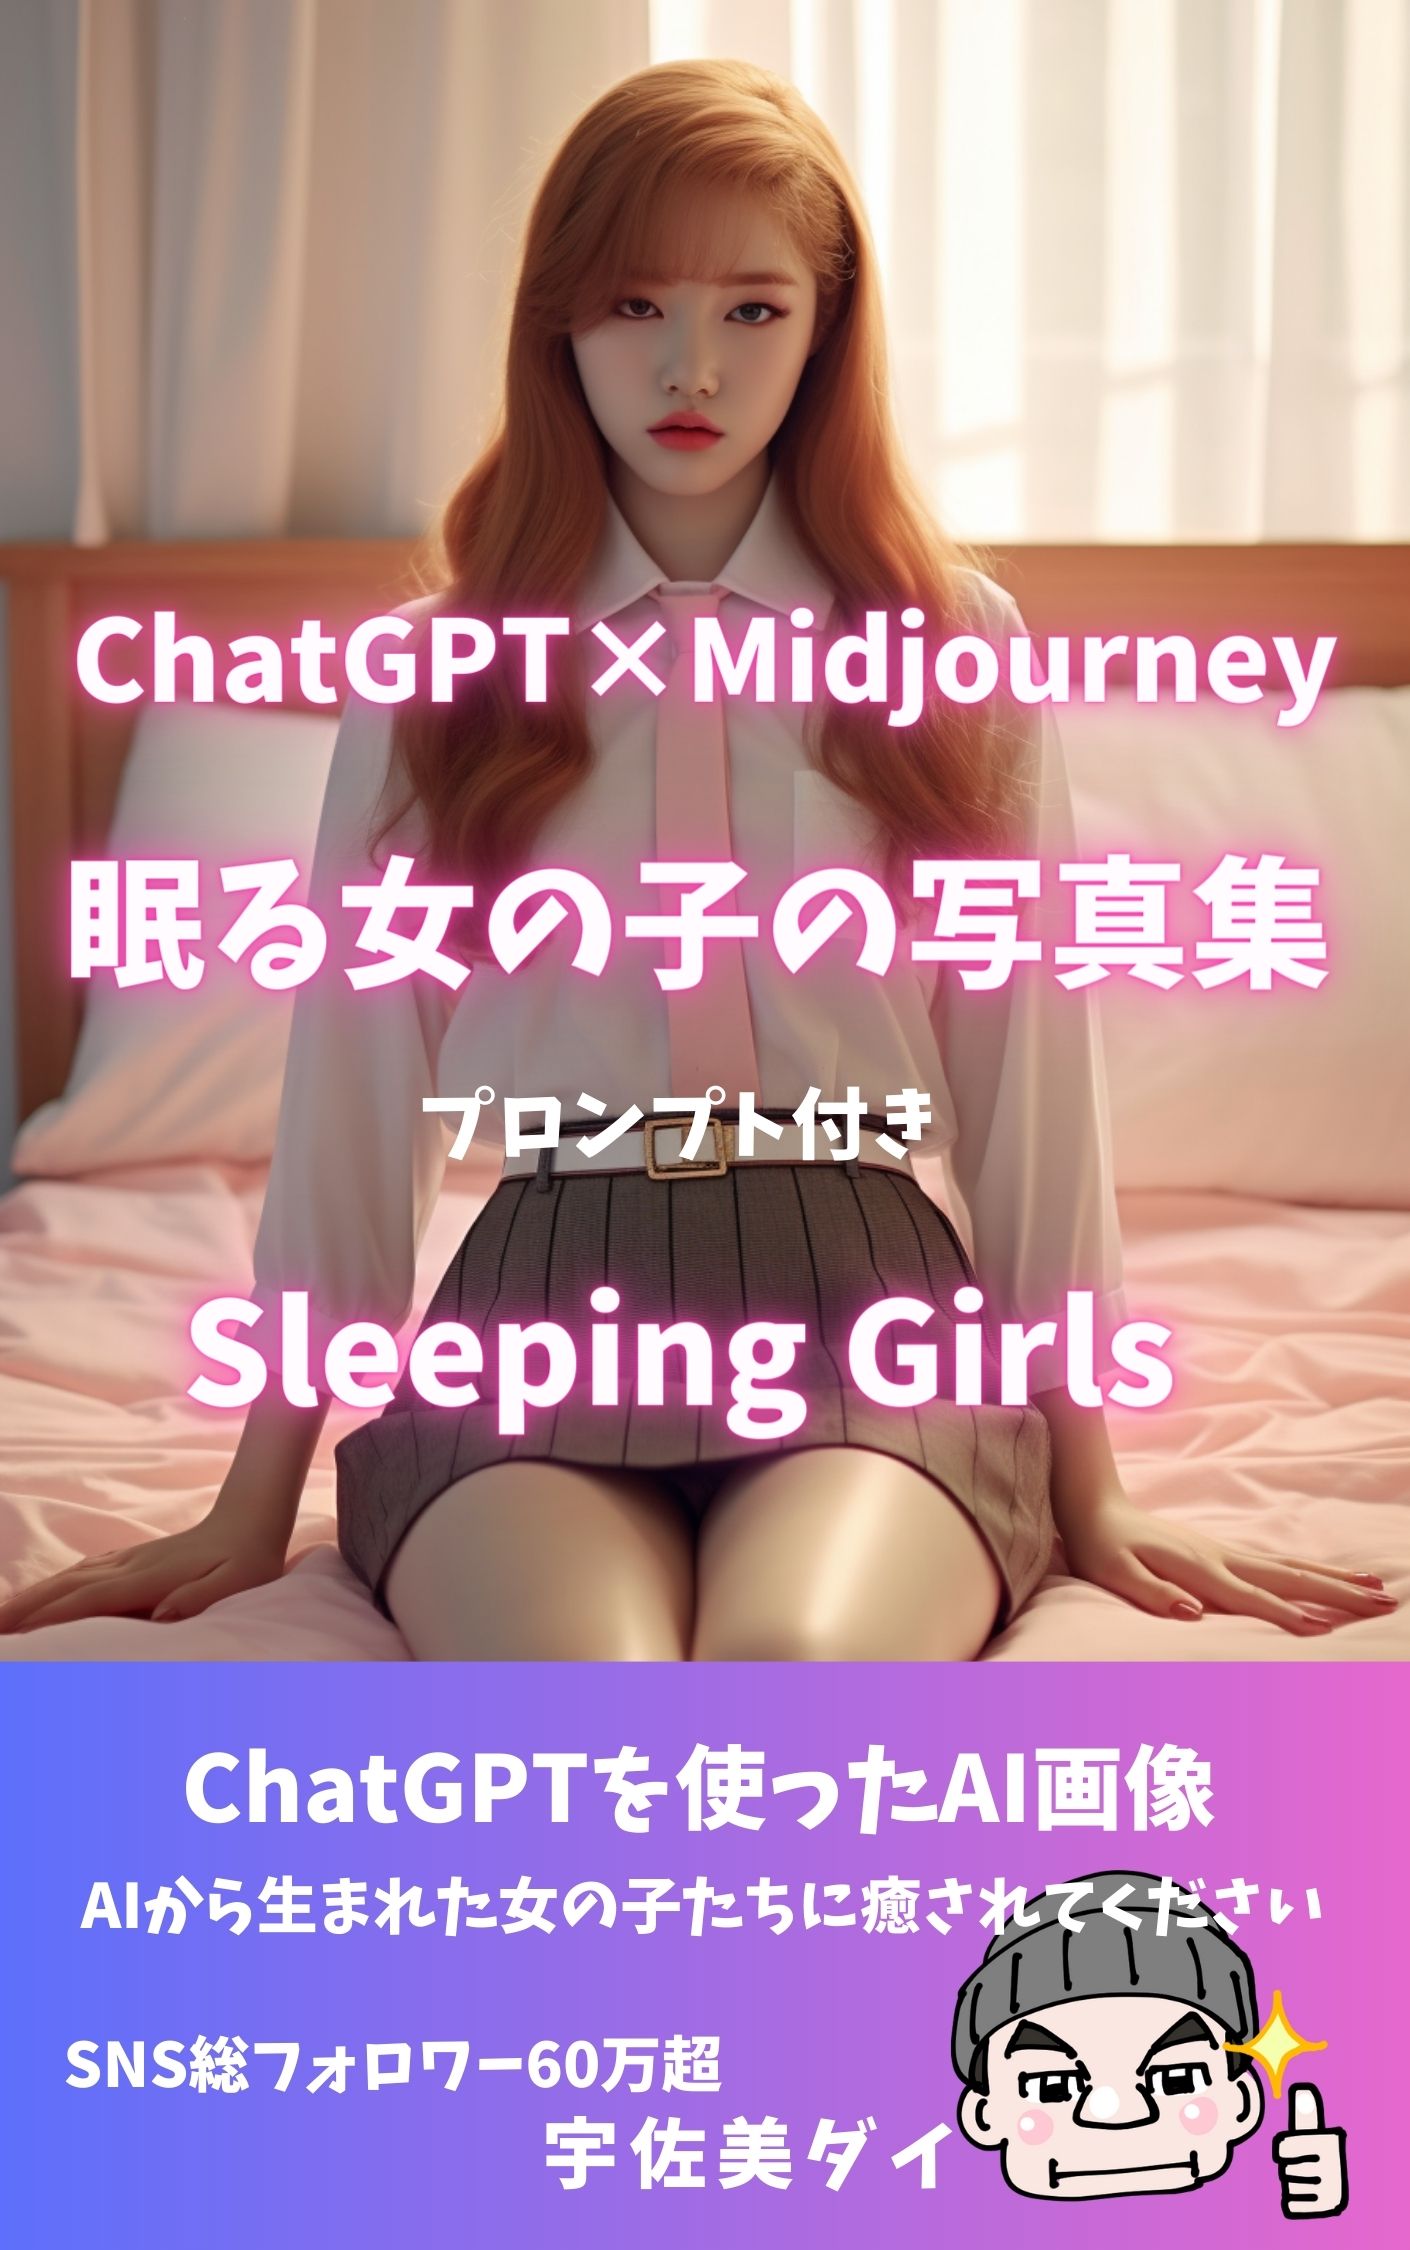 ChatGPTとmidjourney 眠る女の子の写真集 プロンプト付